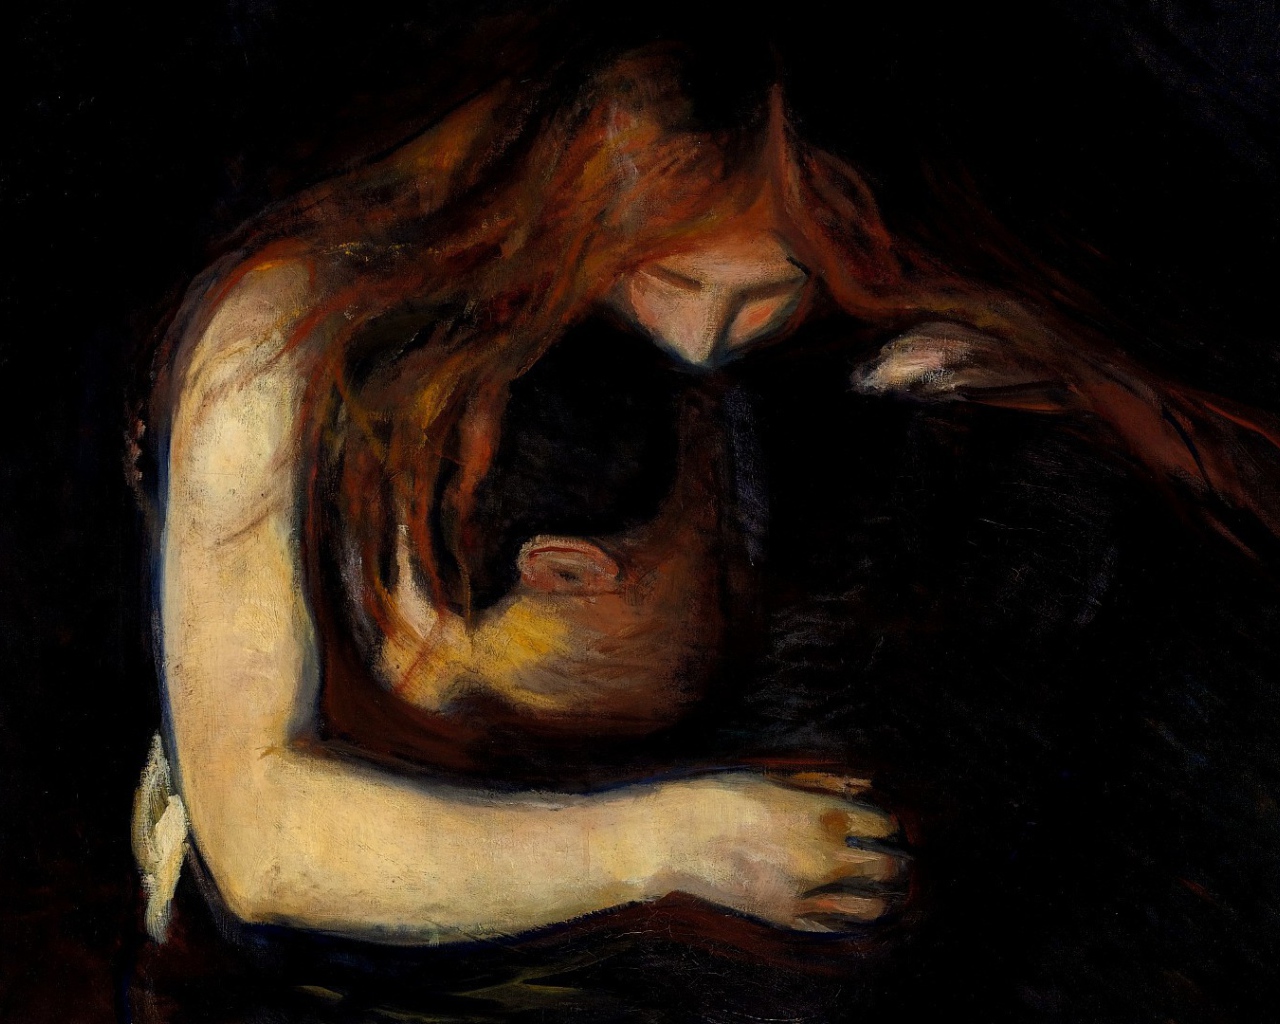 Painting Edvard Munch - Regret